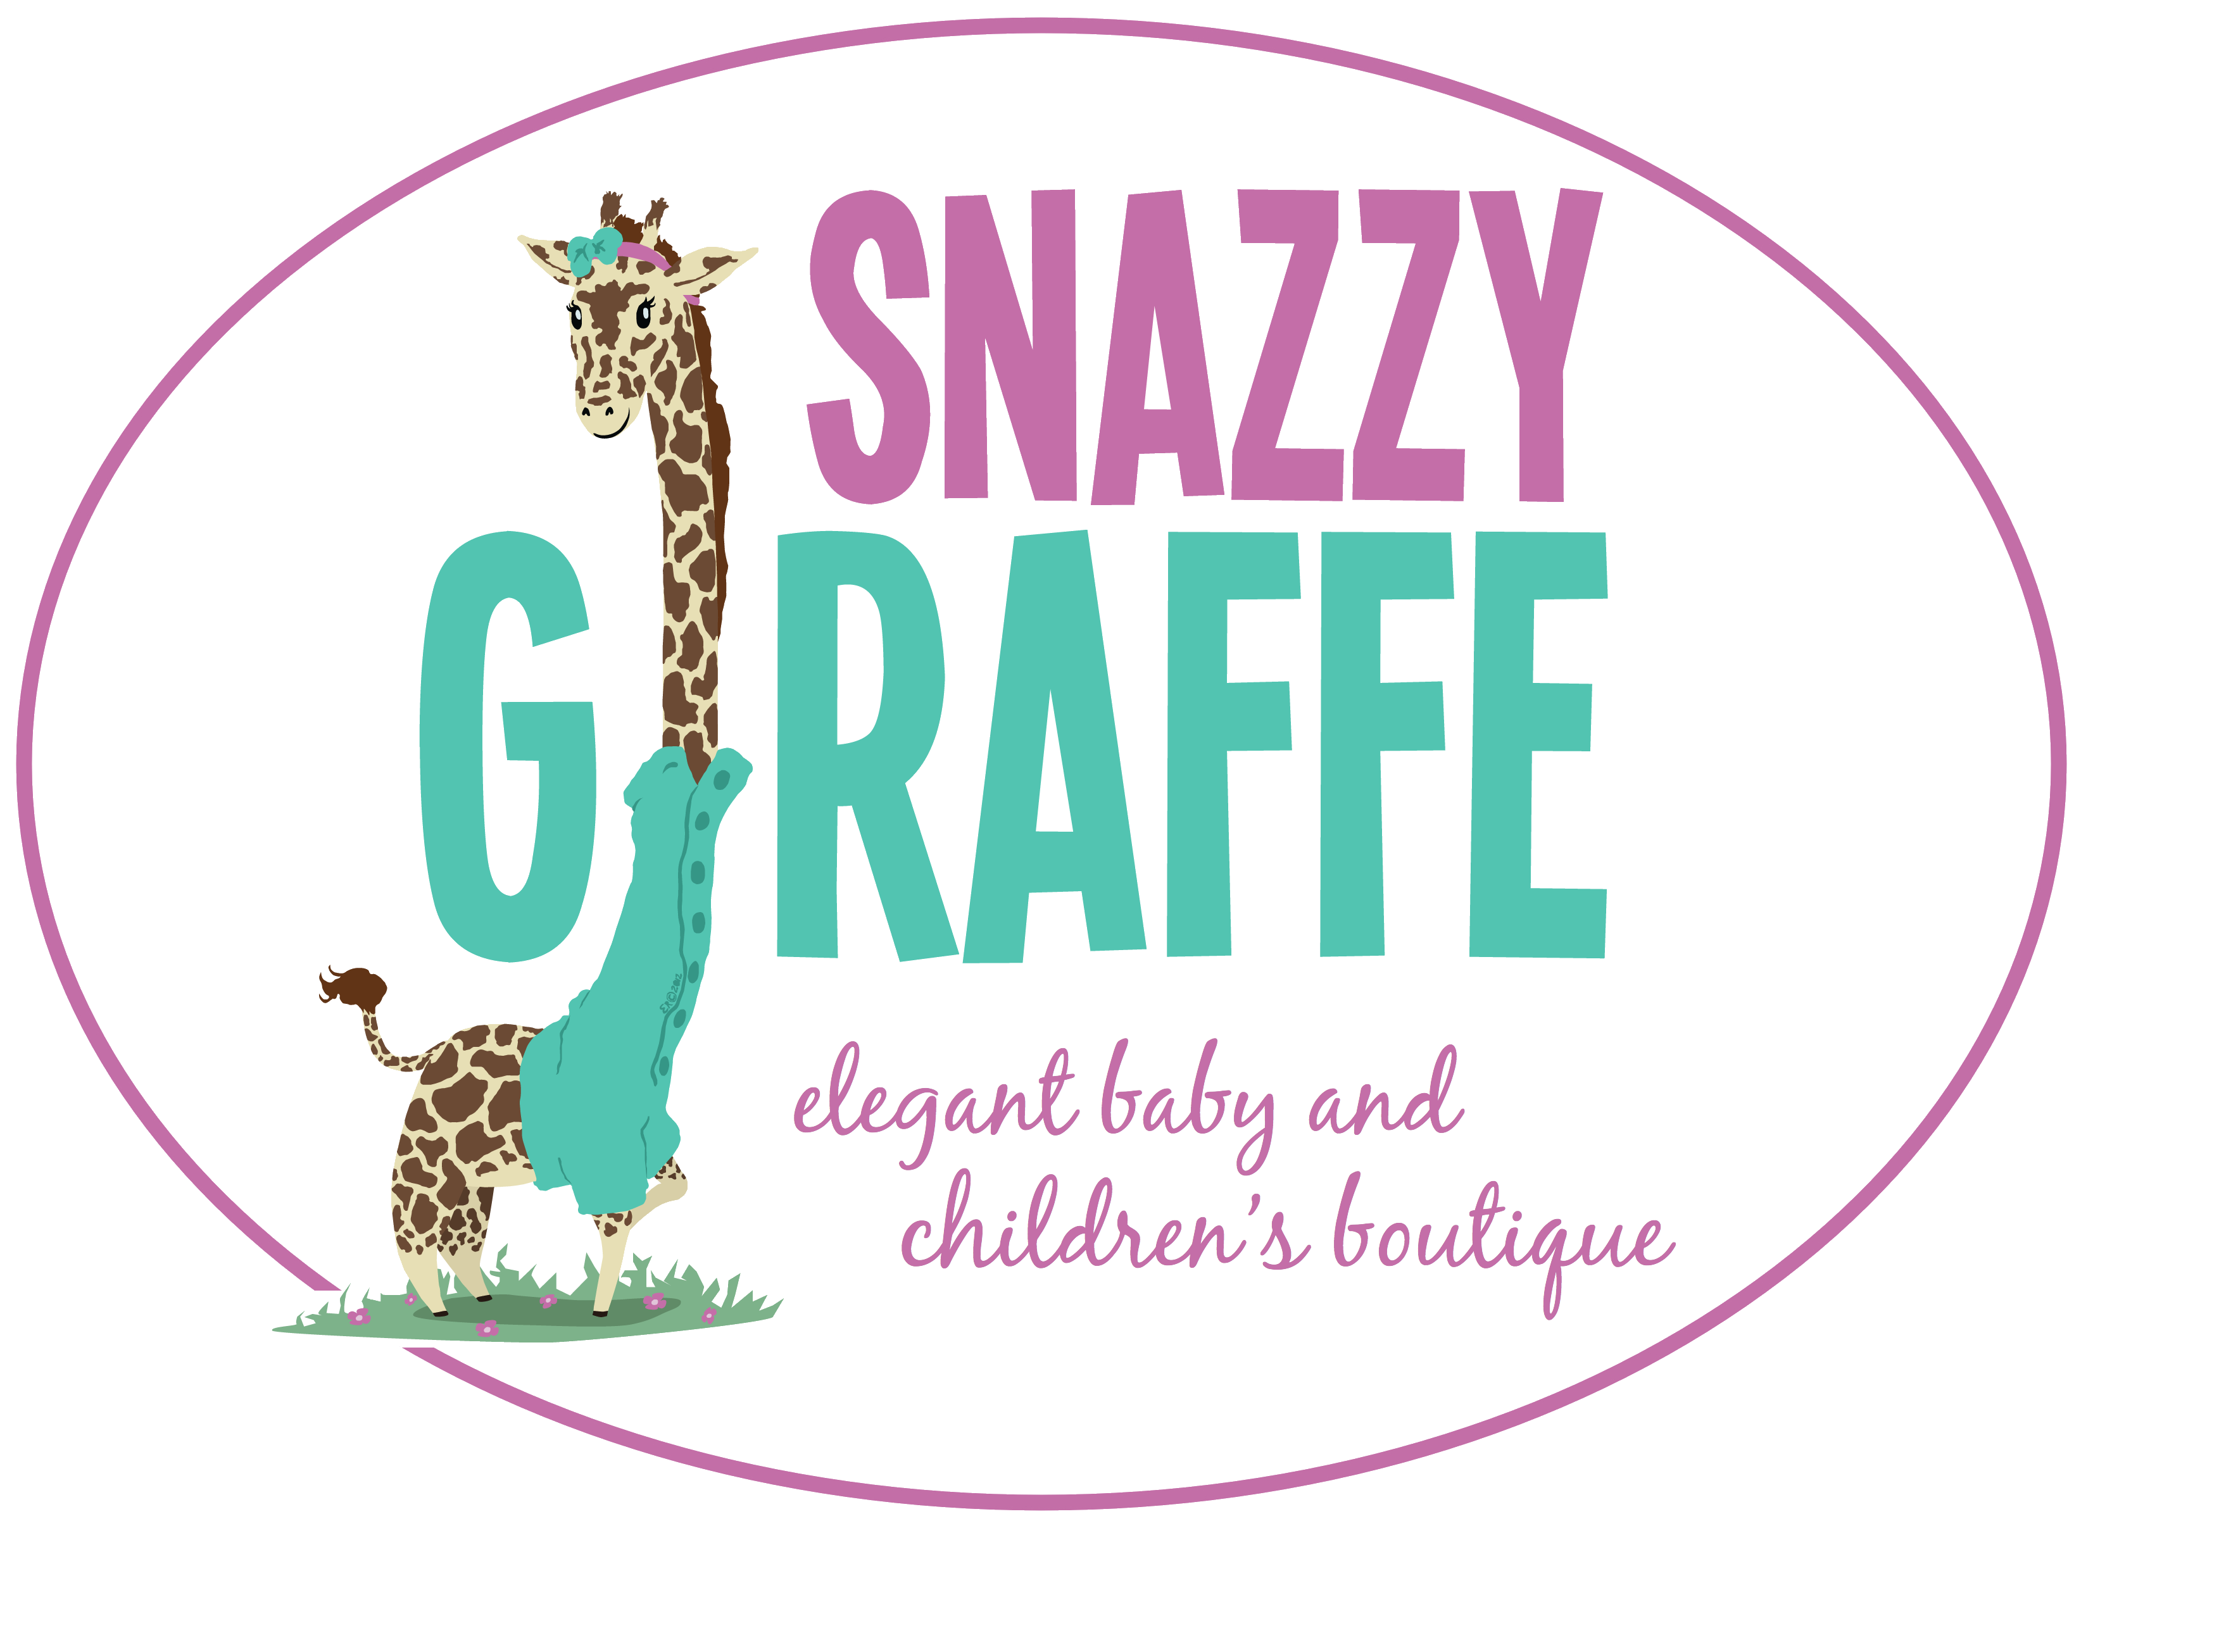 Snazzy Giraffe | Elegant Baby and Children's Boutique